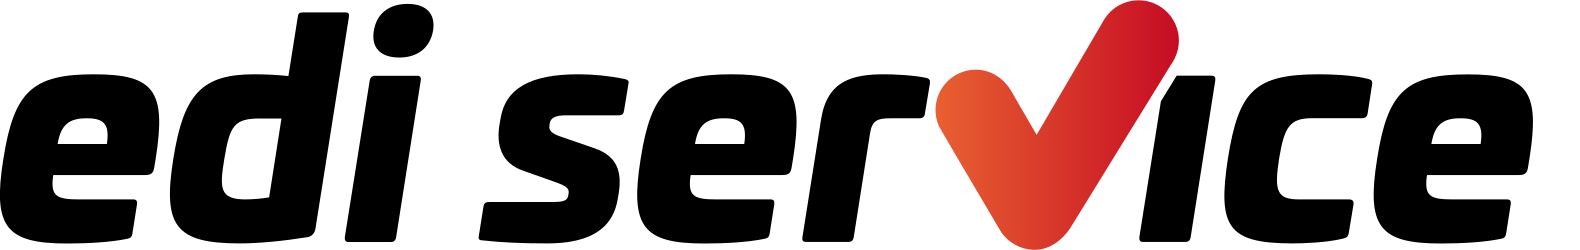 EDI Service Logo mit rotem Häkchen